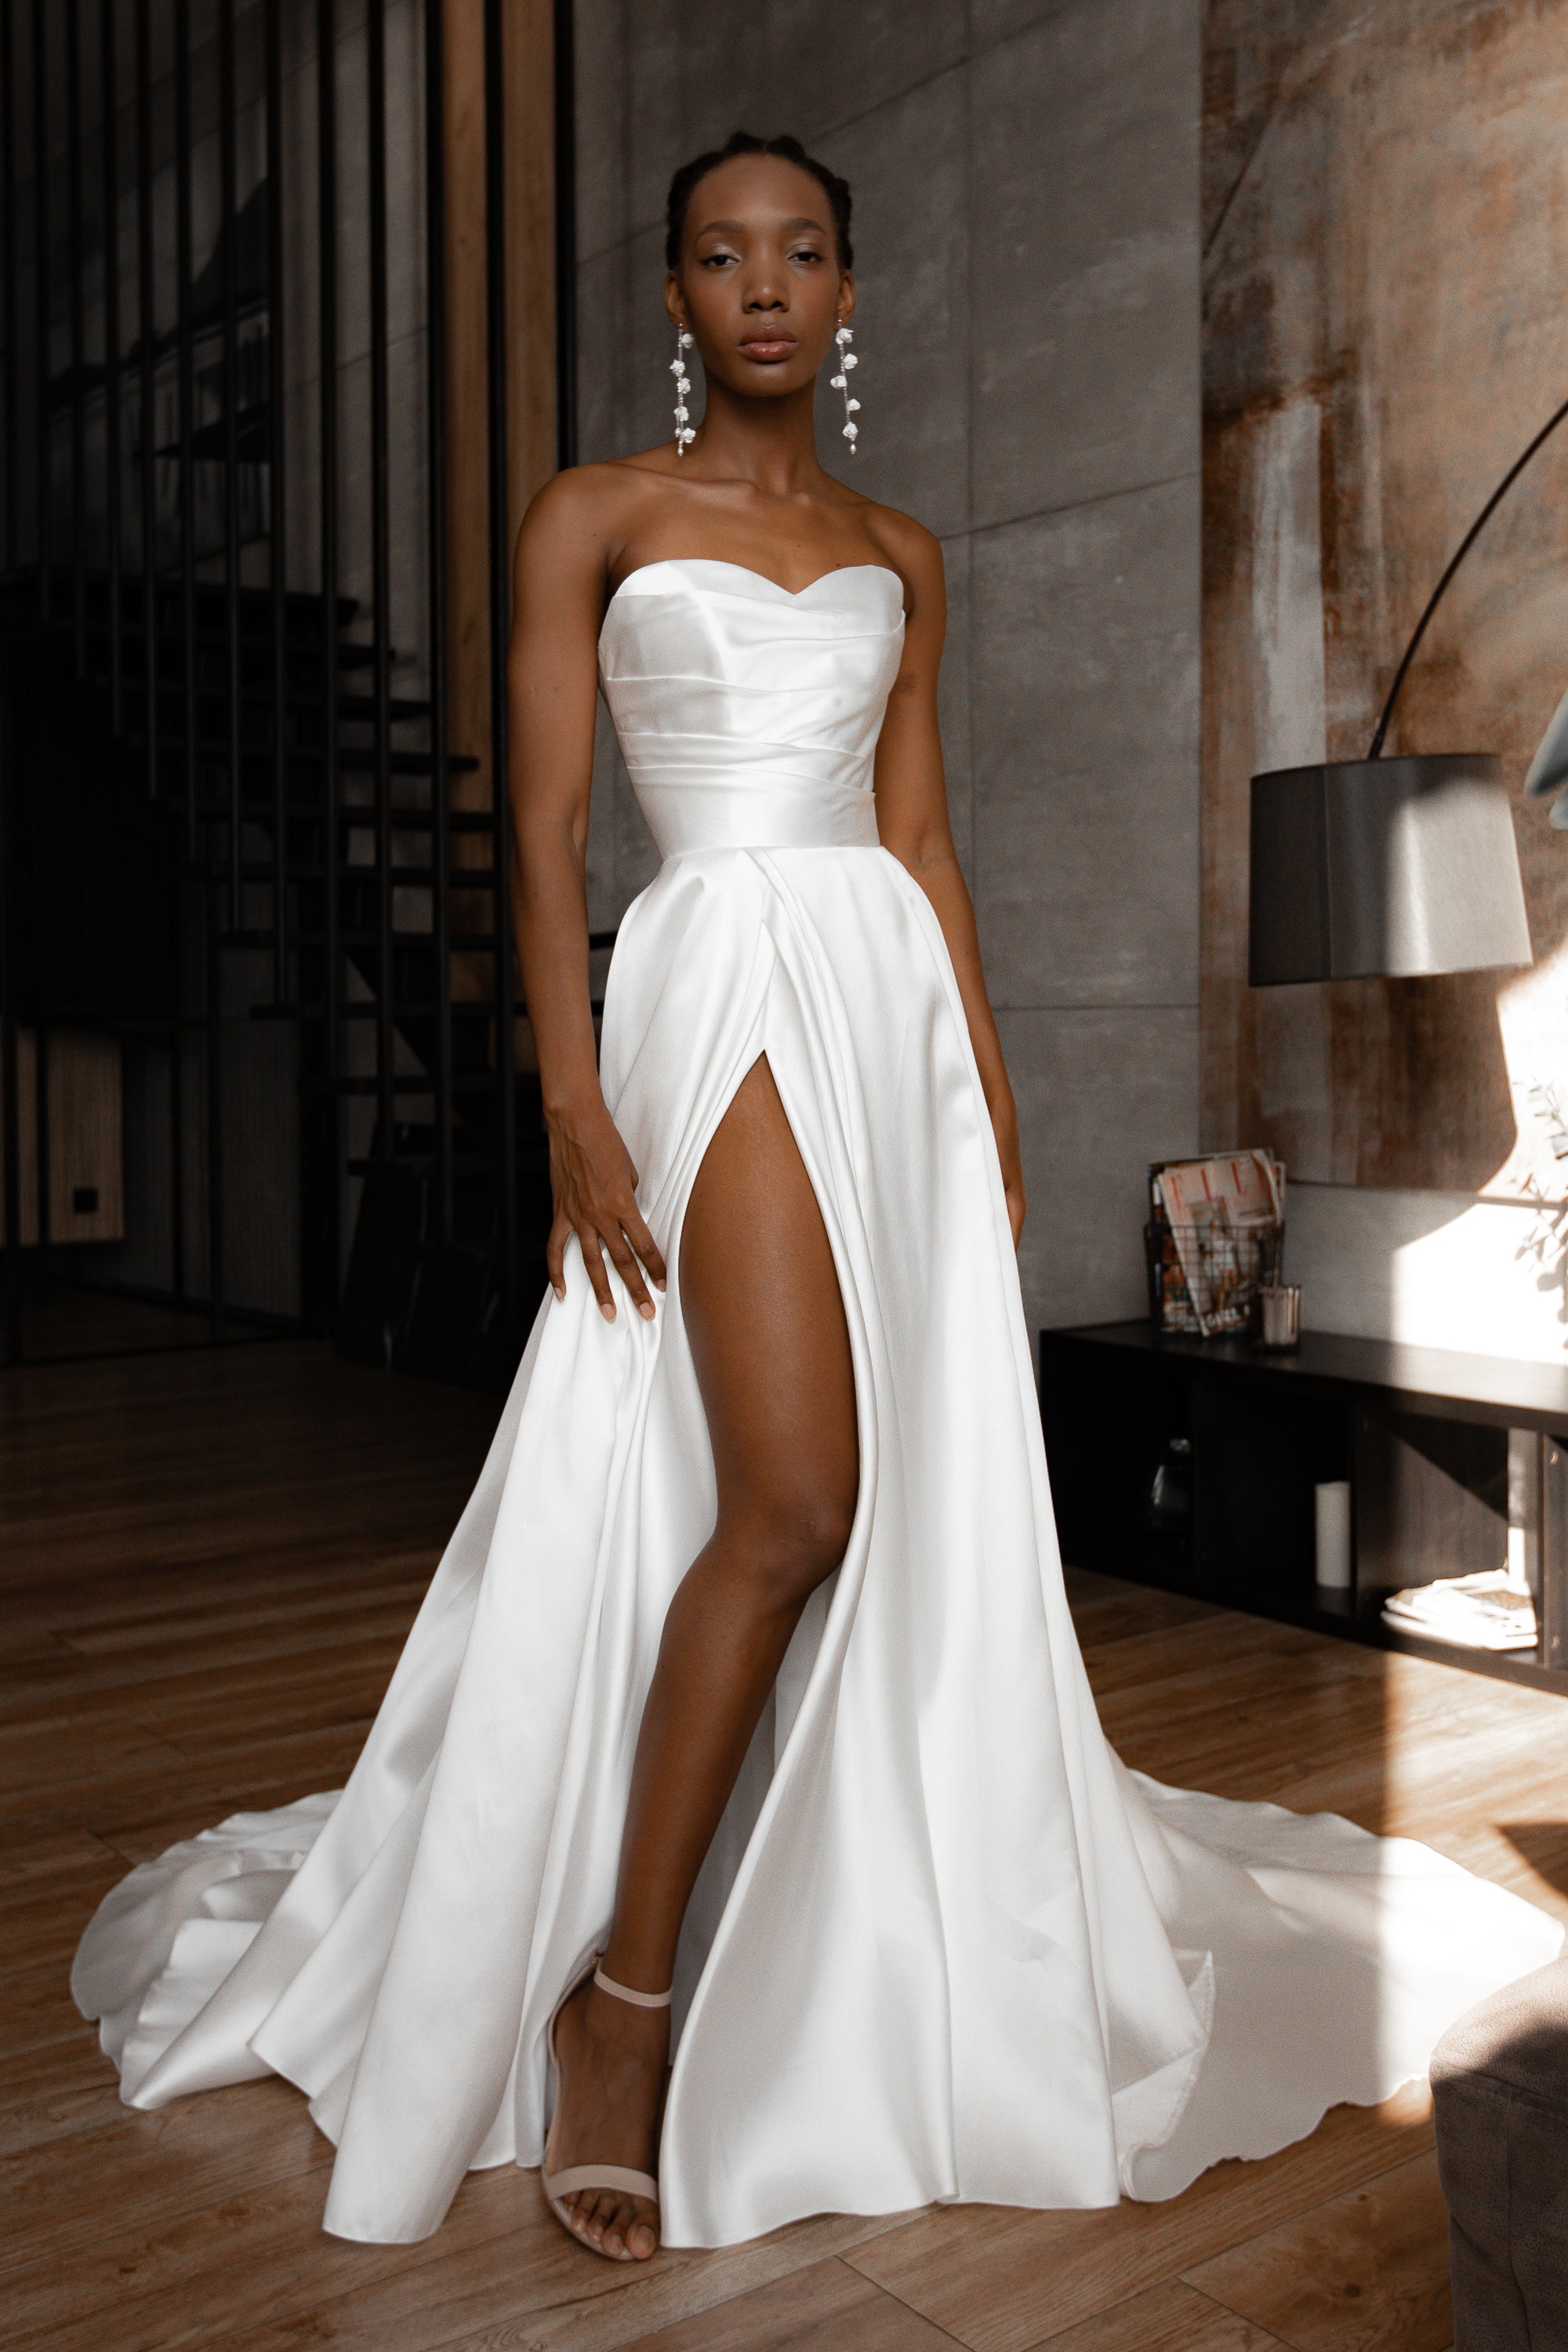 Modern Romantic Bridal Looks: 48 Short Wedding Dresses to Redefine